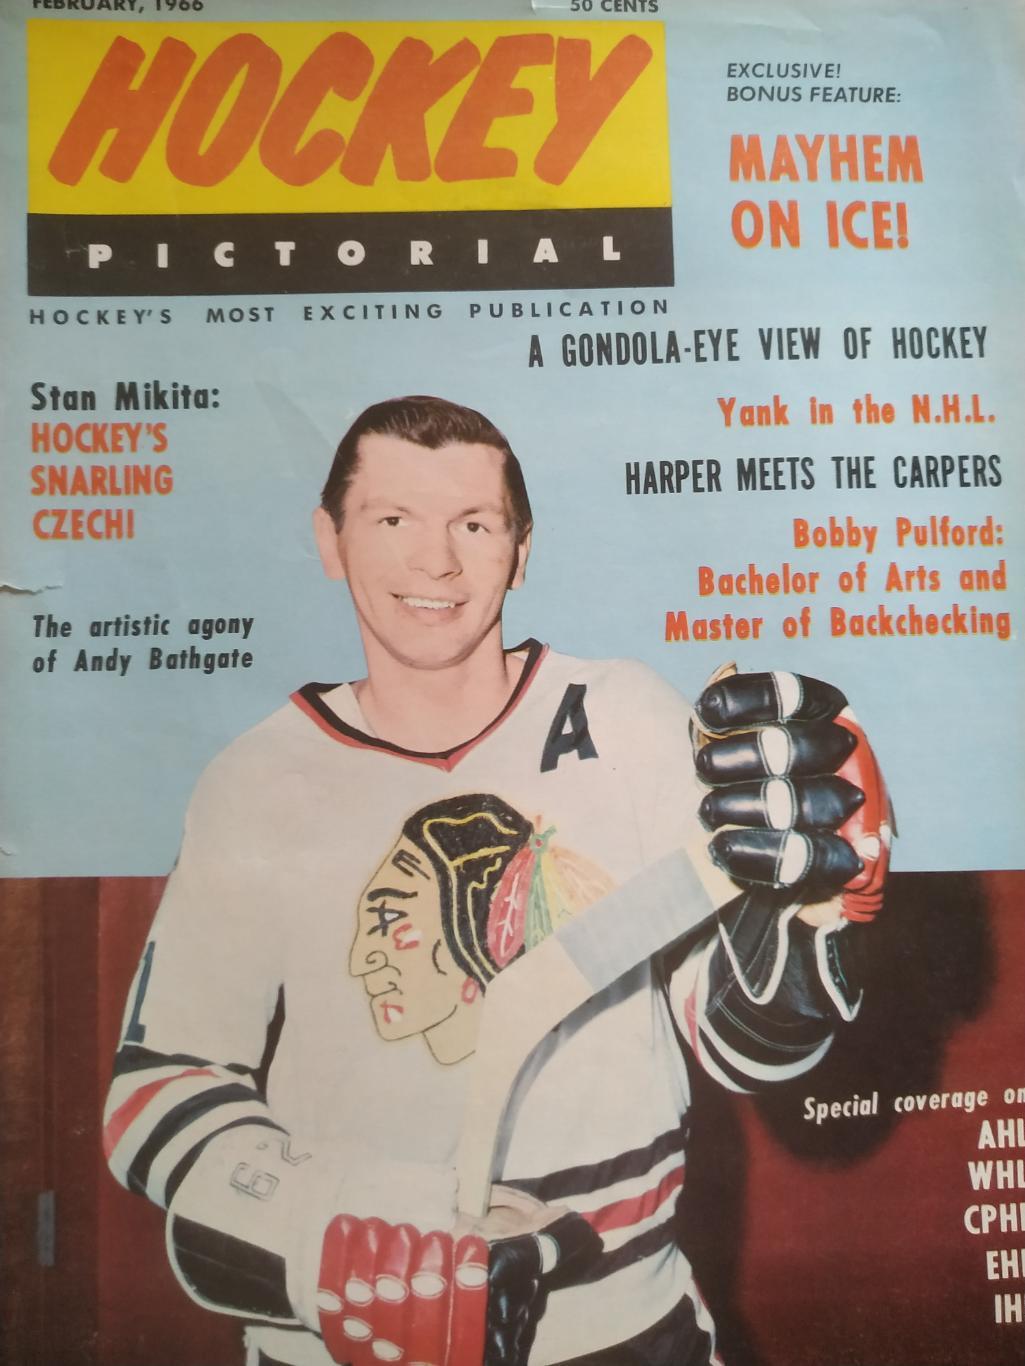 ХОККЕЙ ЖУРНАЛ ЕЖЕМЕСЯЧНИК НХЛ NHL 1966 FEB HOCKEY PICTORIAL